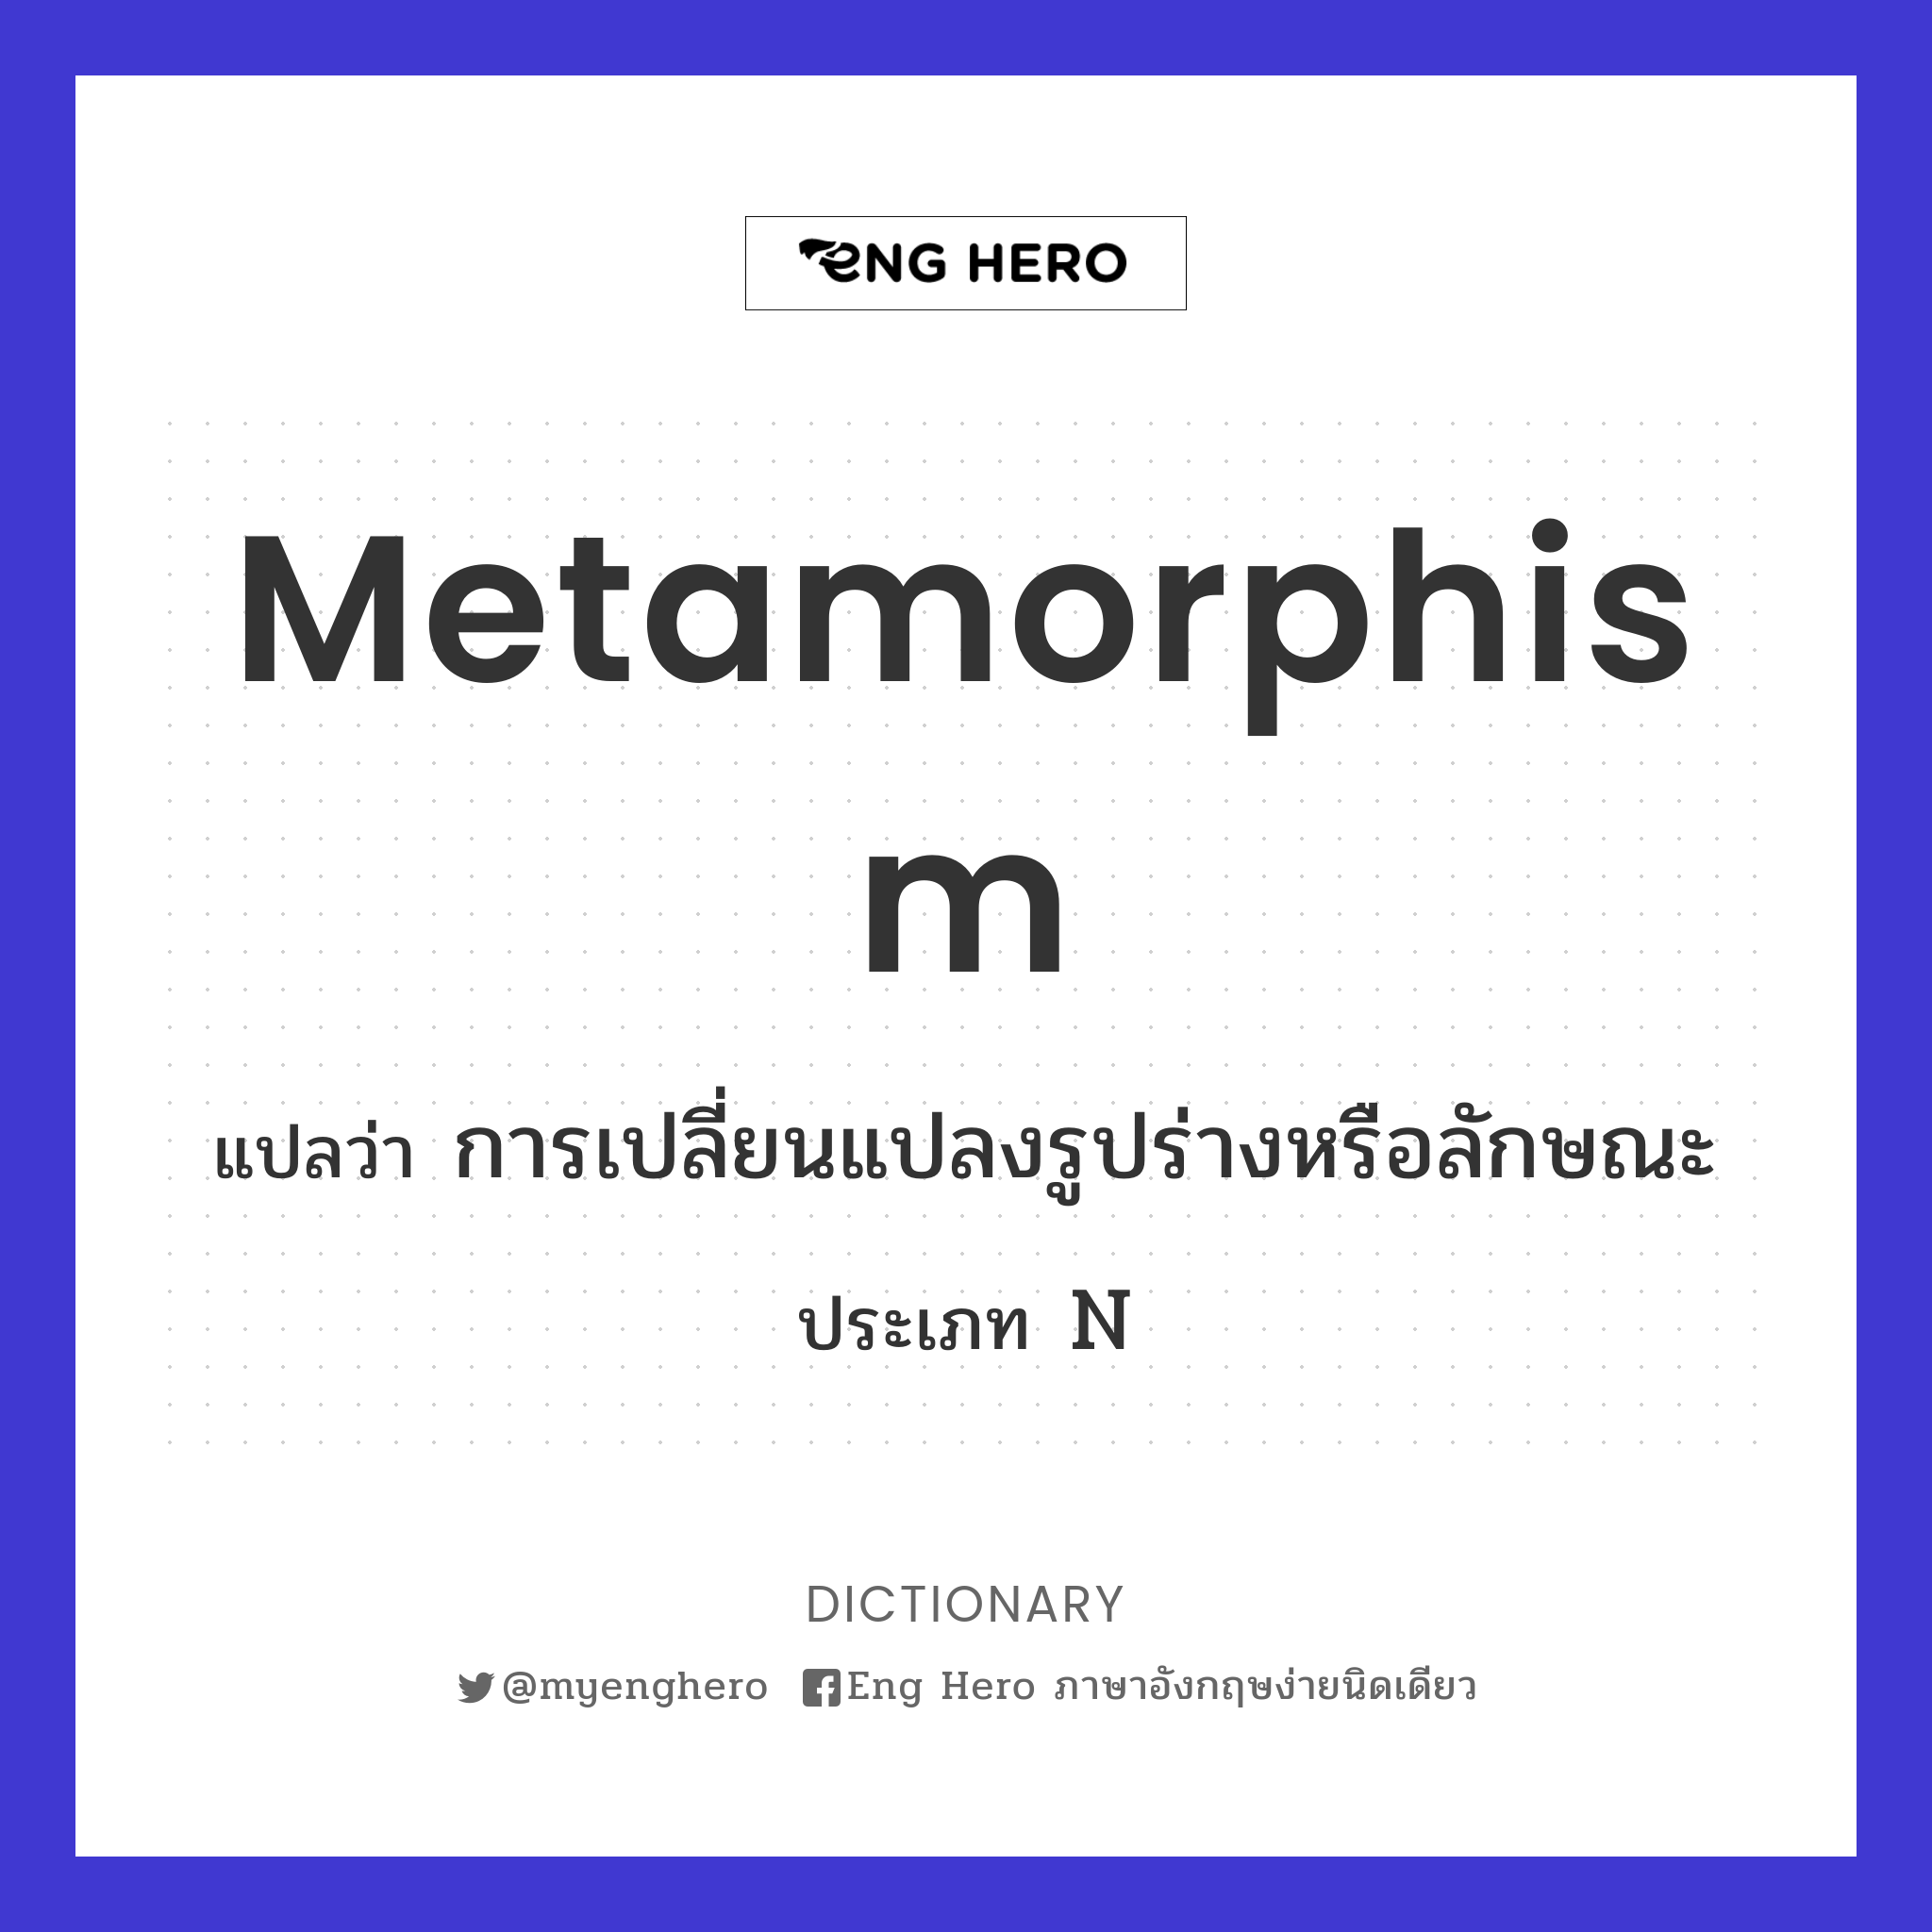 metamorphism